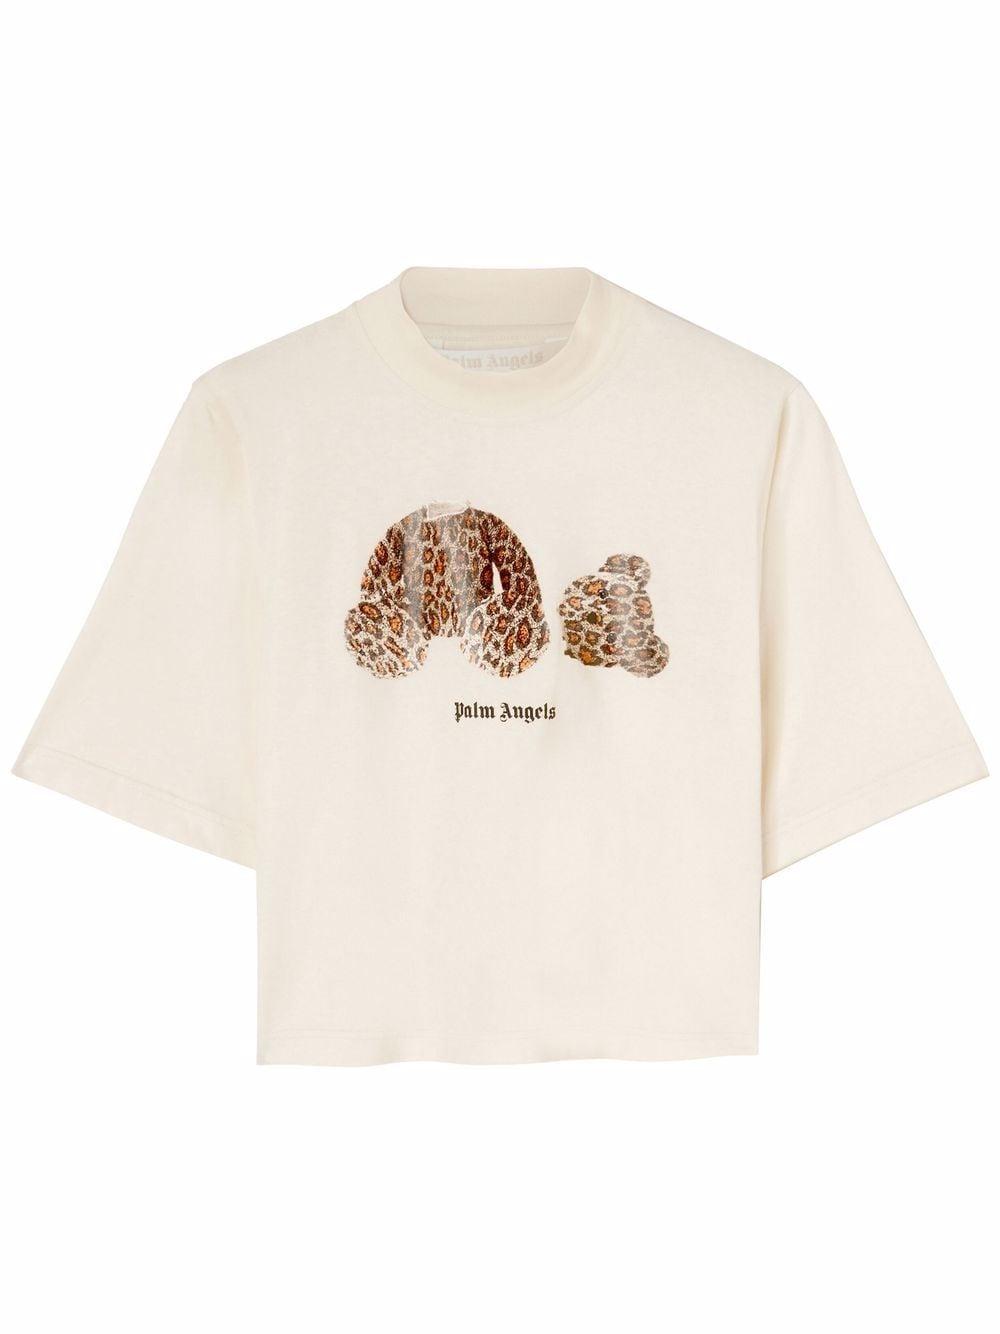 https://cdna.lystit.com/photos/farfetch/f3a6f436/palm-angels-white-Leopard-bear-T-shirt.jpeg